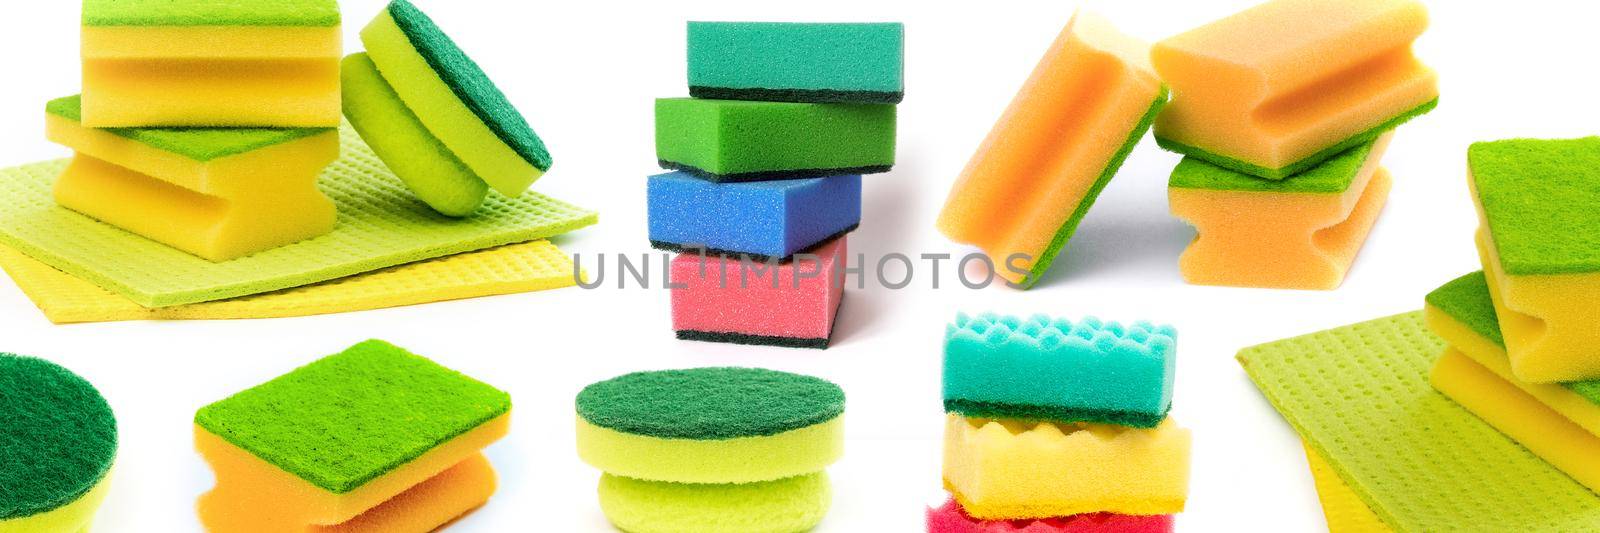 Kitchen sponges set collage by tan4ikk1